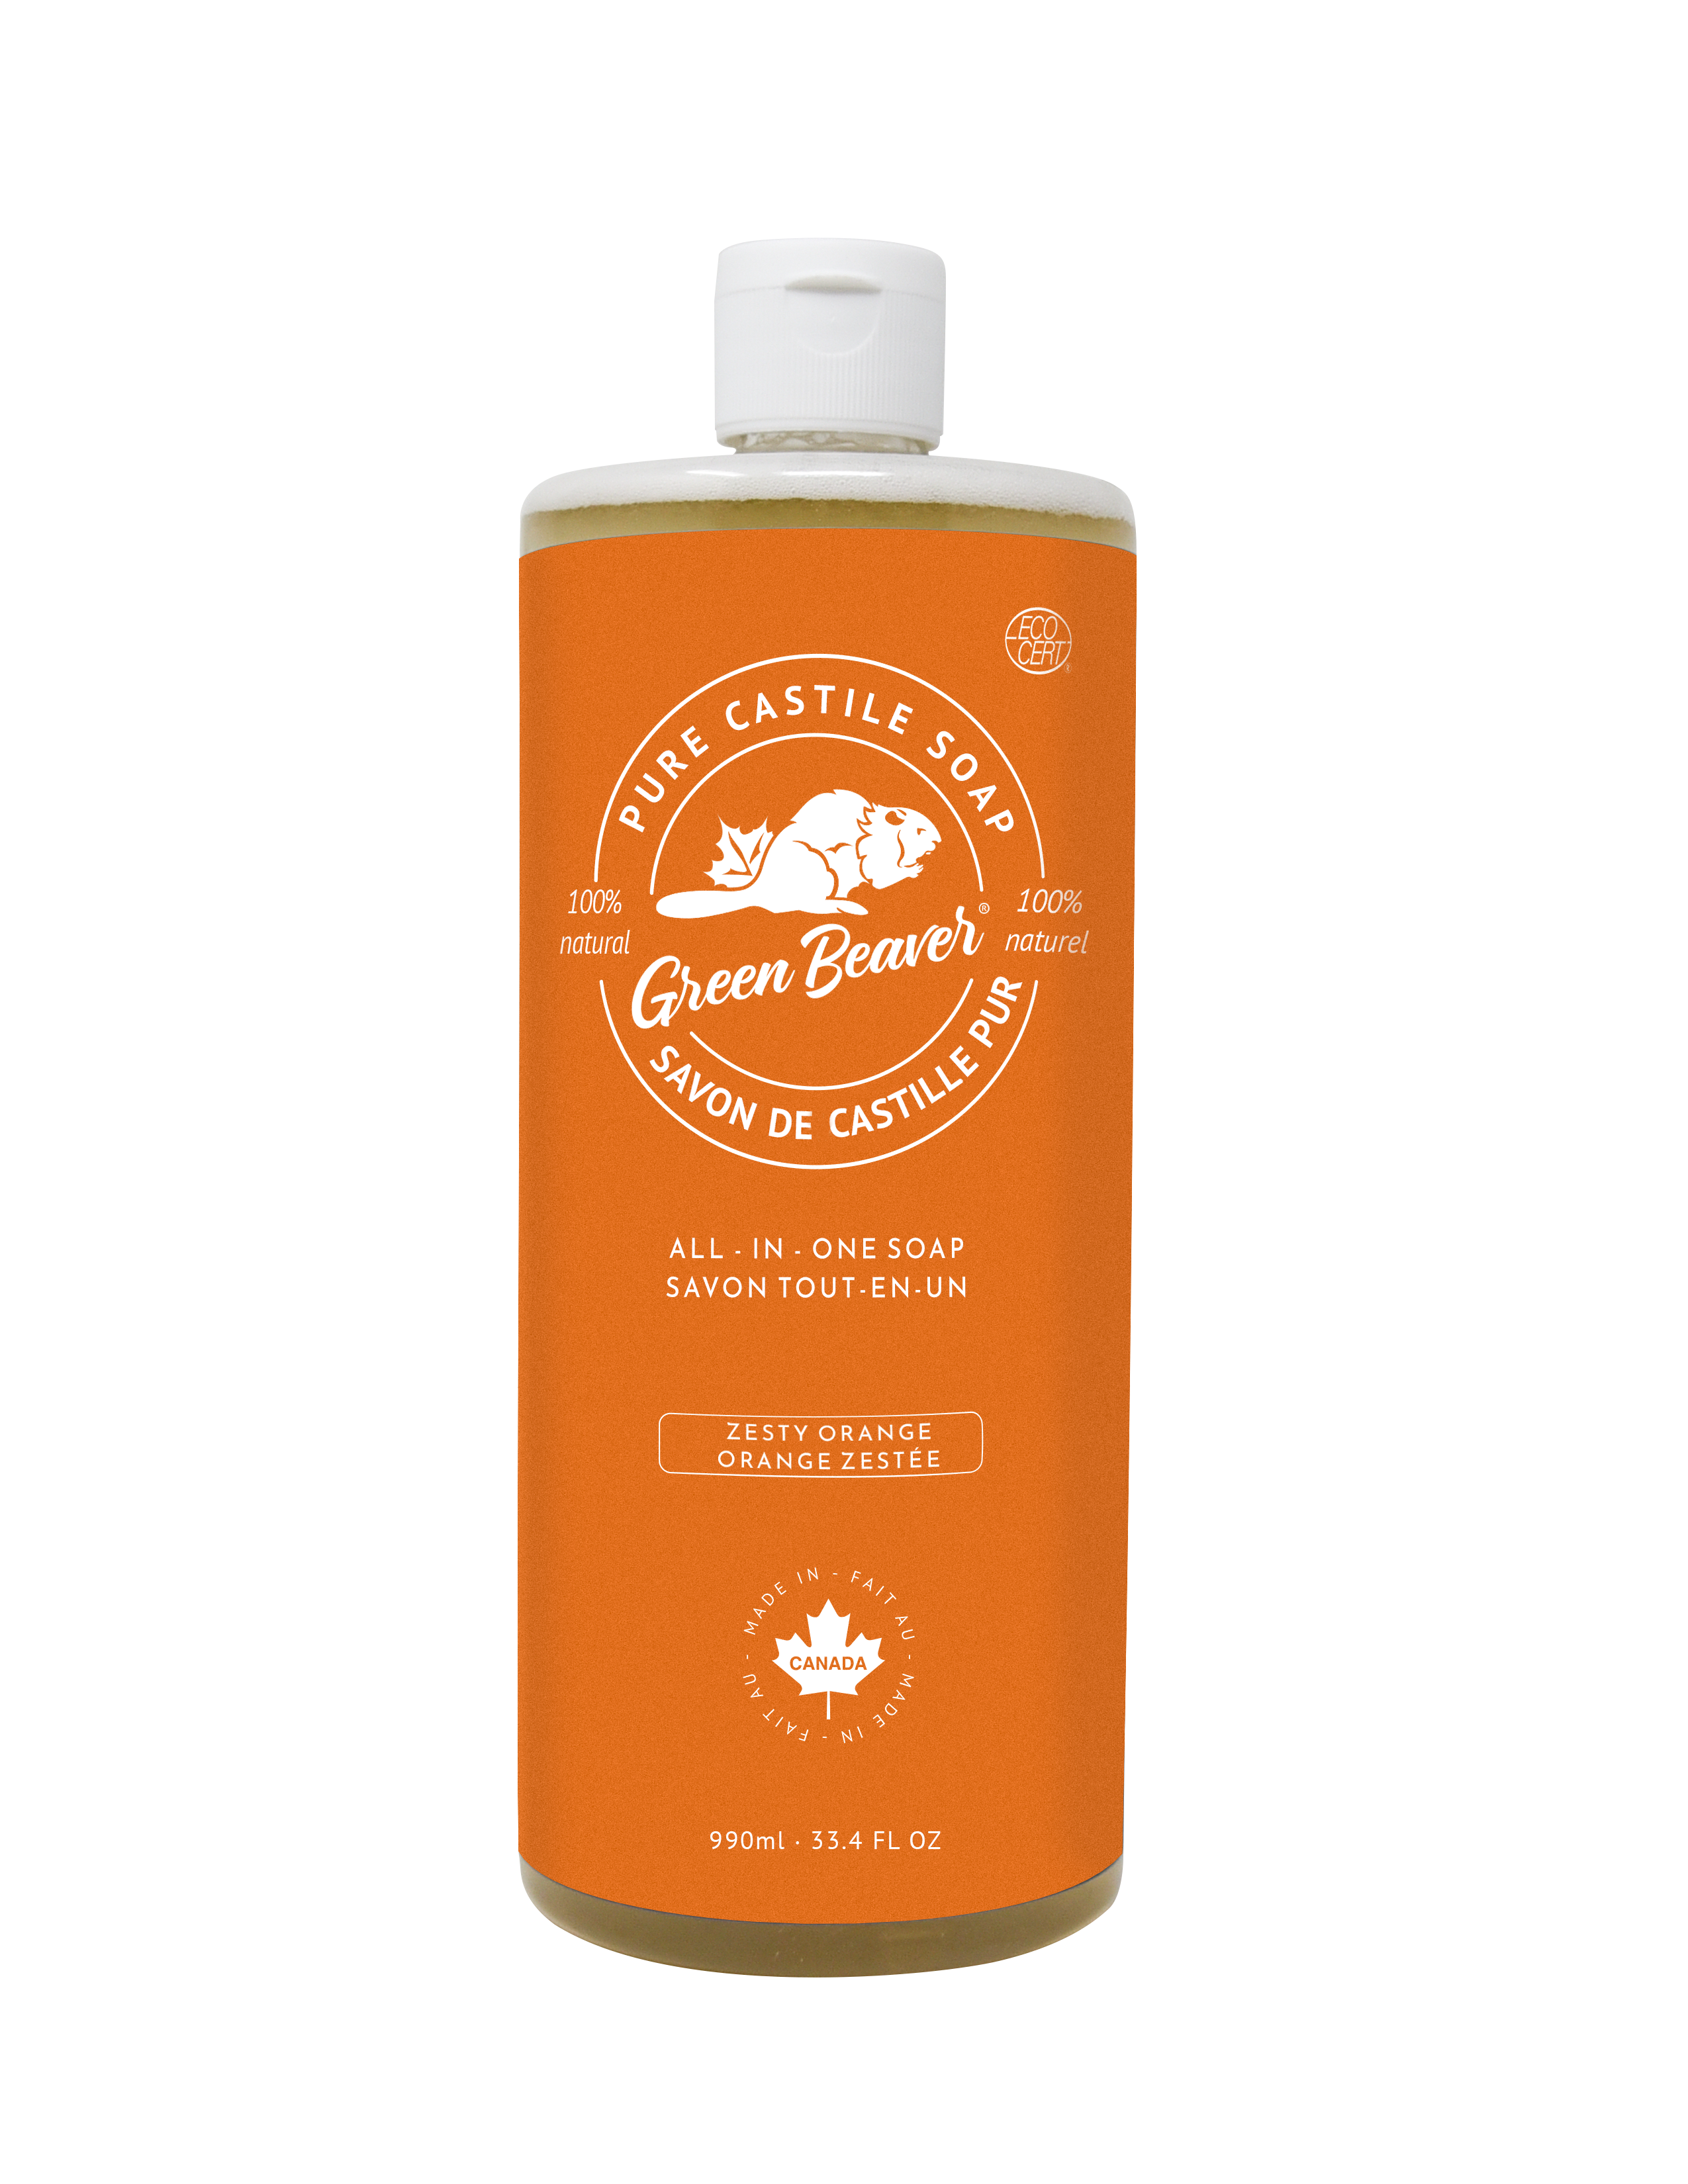 A bottle of Green Beaver's Castile Soap in Orange scent